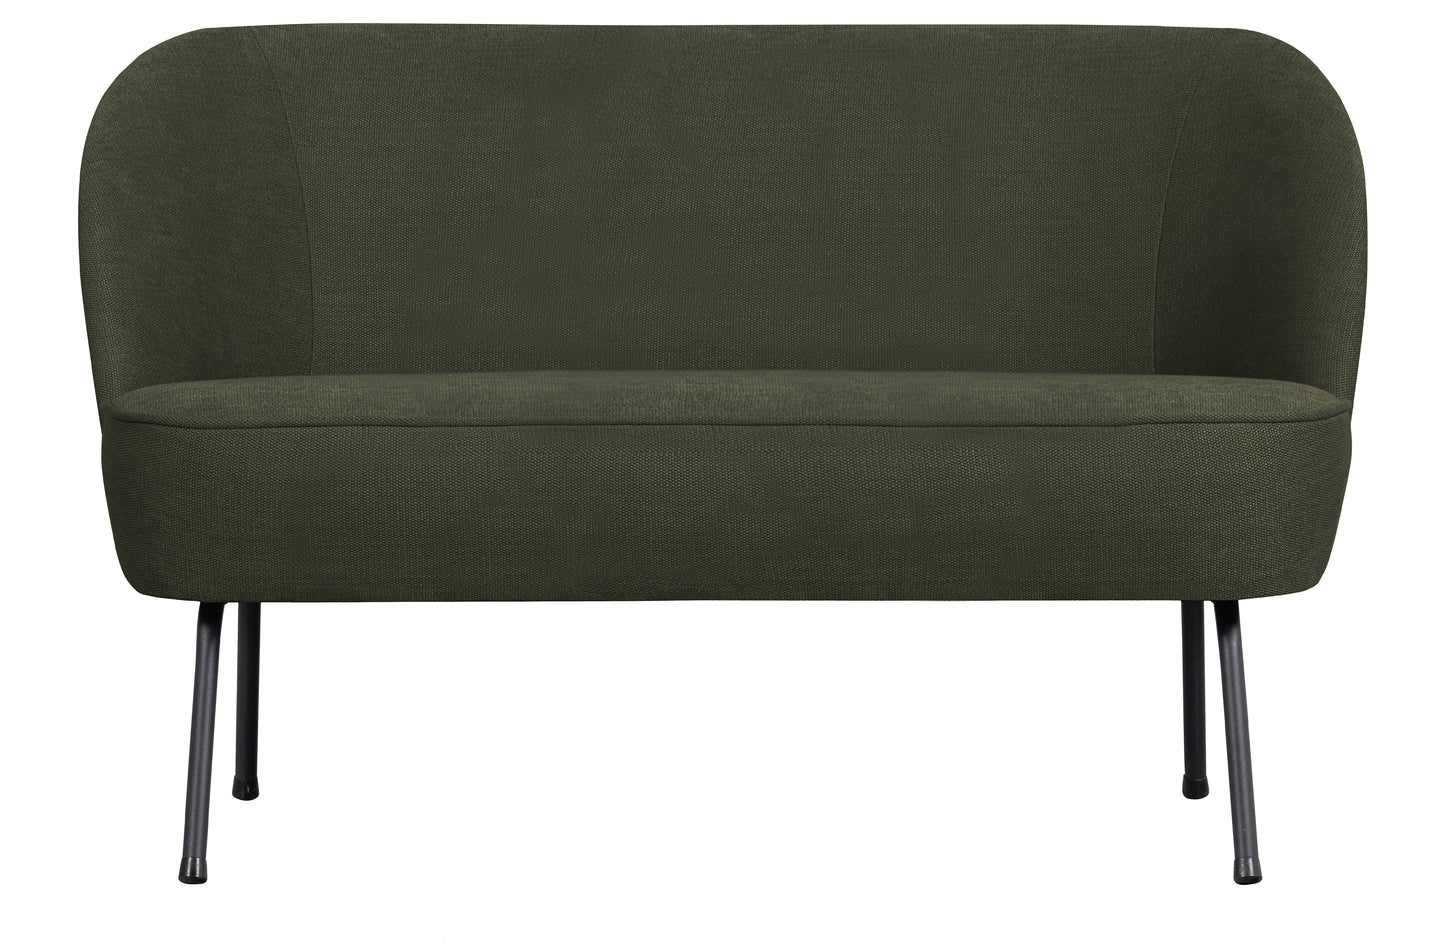 Vogue 2-seat Bench Woven Fabric Warm Green